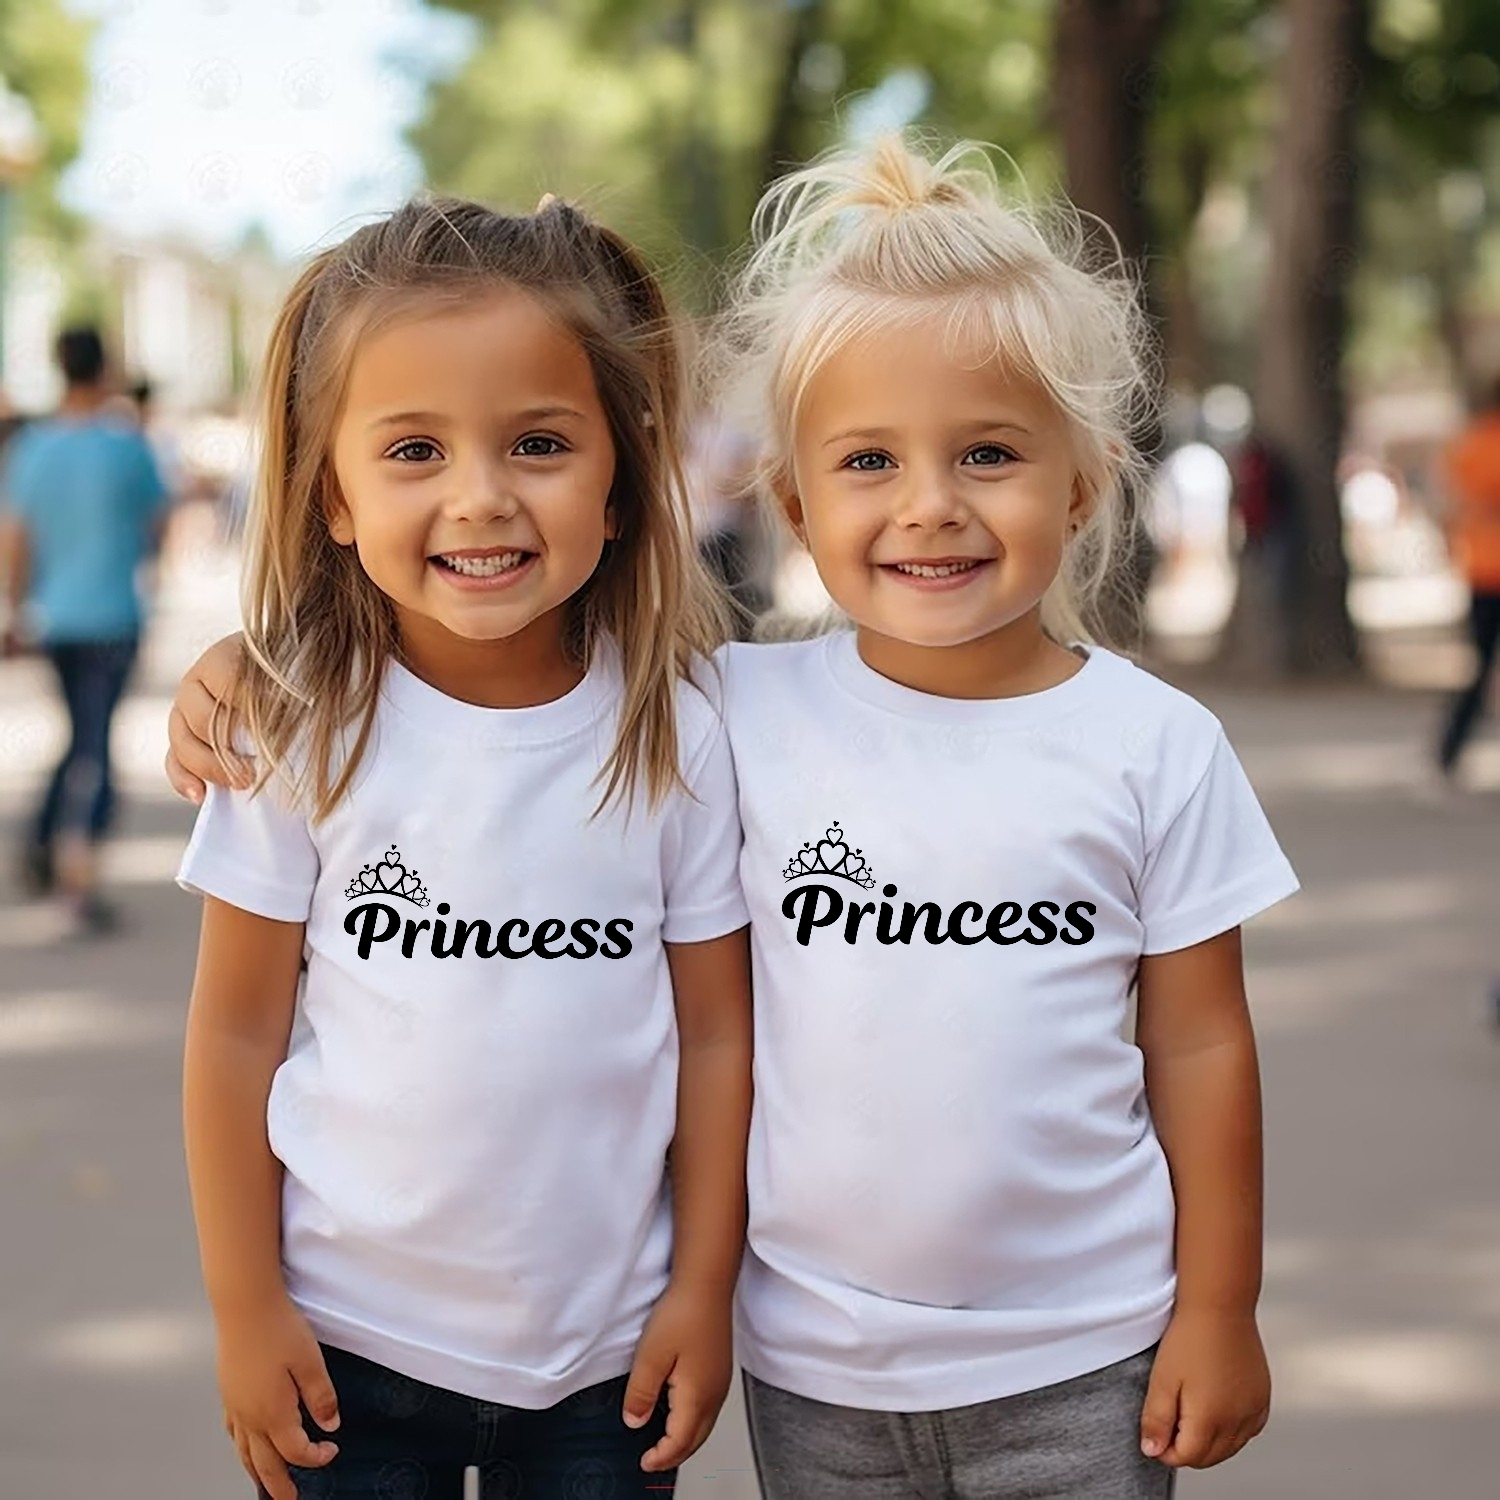 T-shirt corona King-Queen-Prinsss-Prince